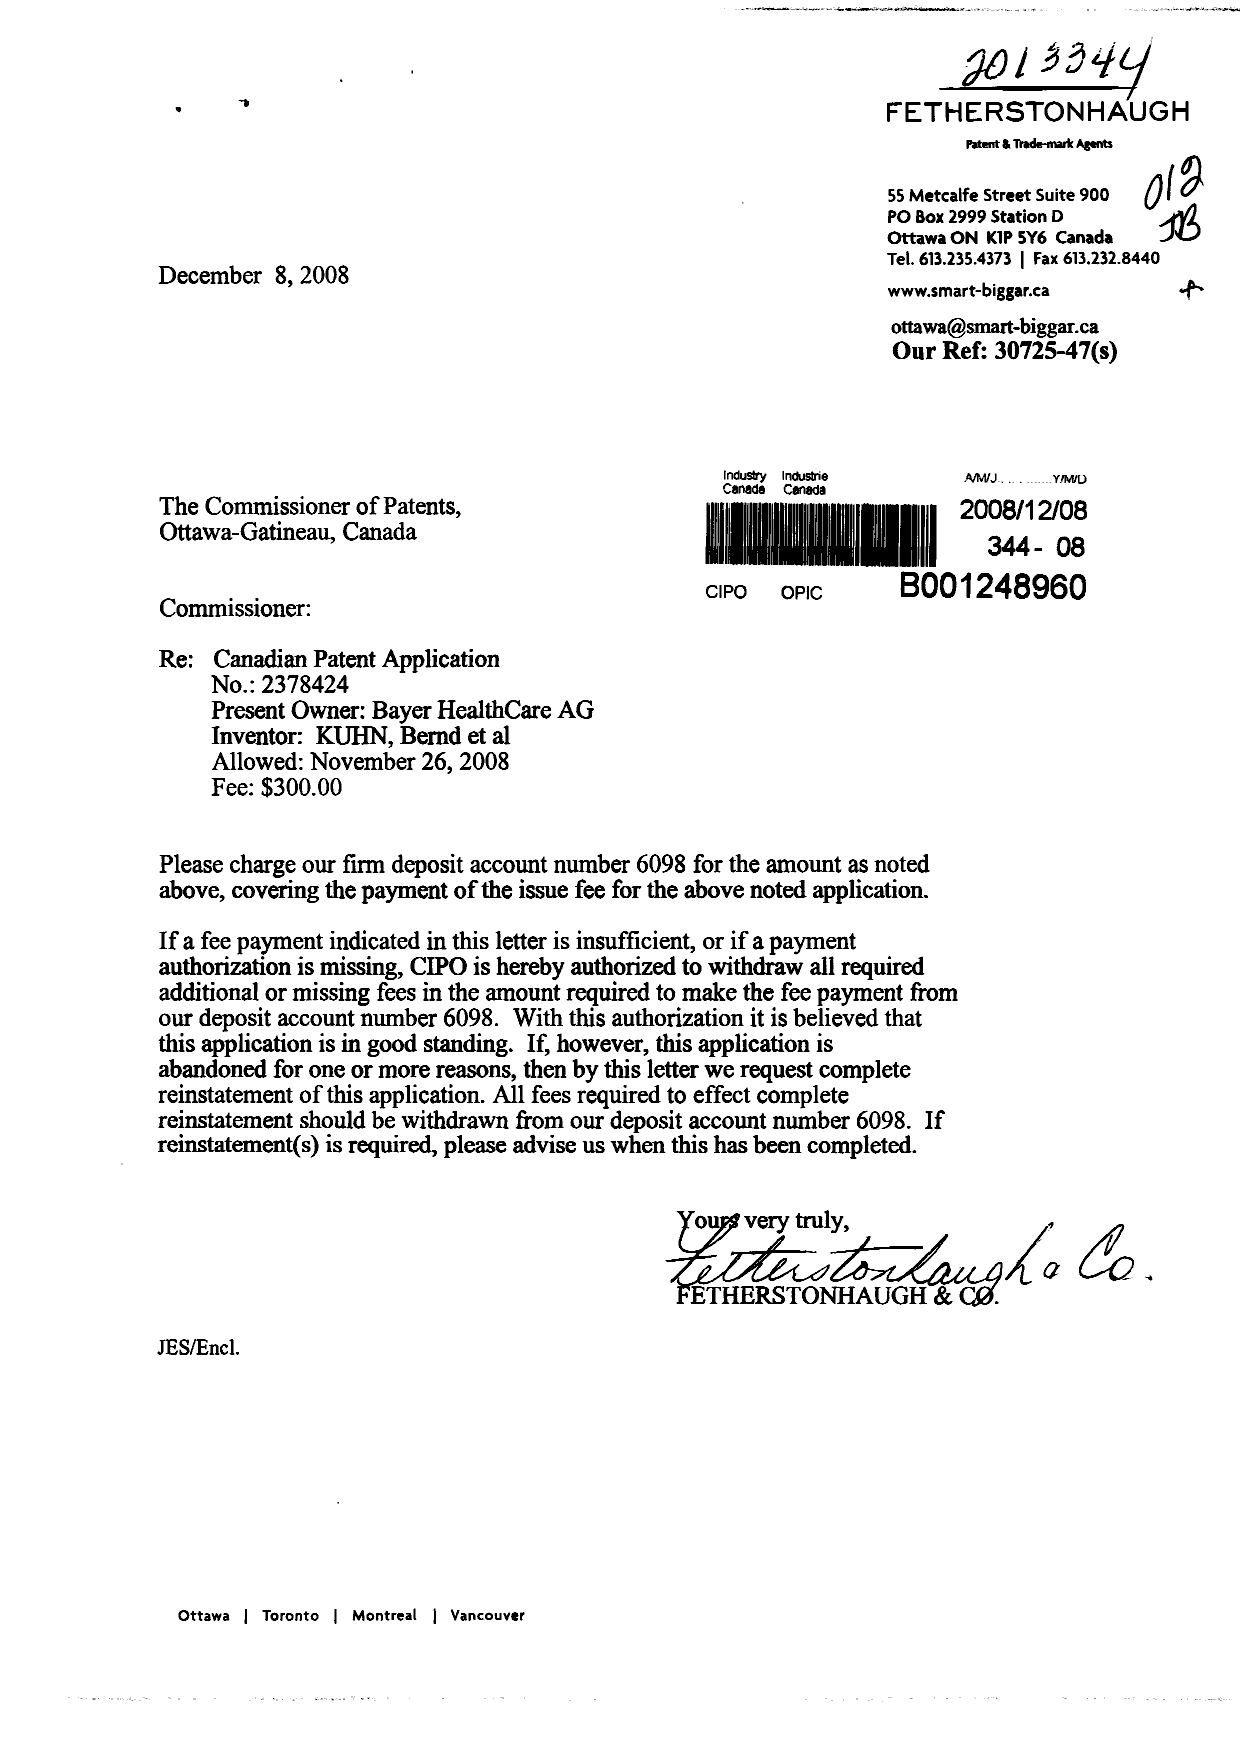 Canadian Patent Document 2378424. Correspondence 20071208. Image 1 of 1